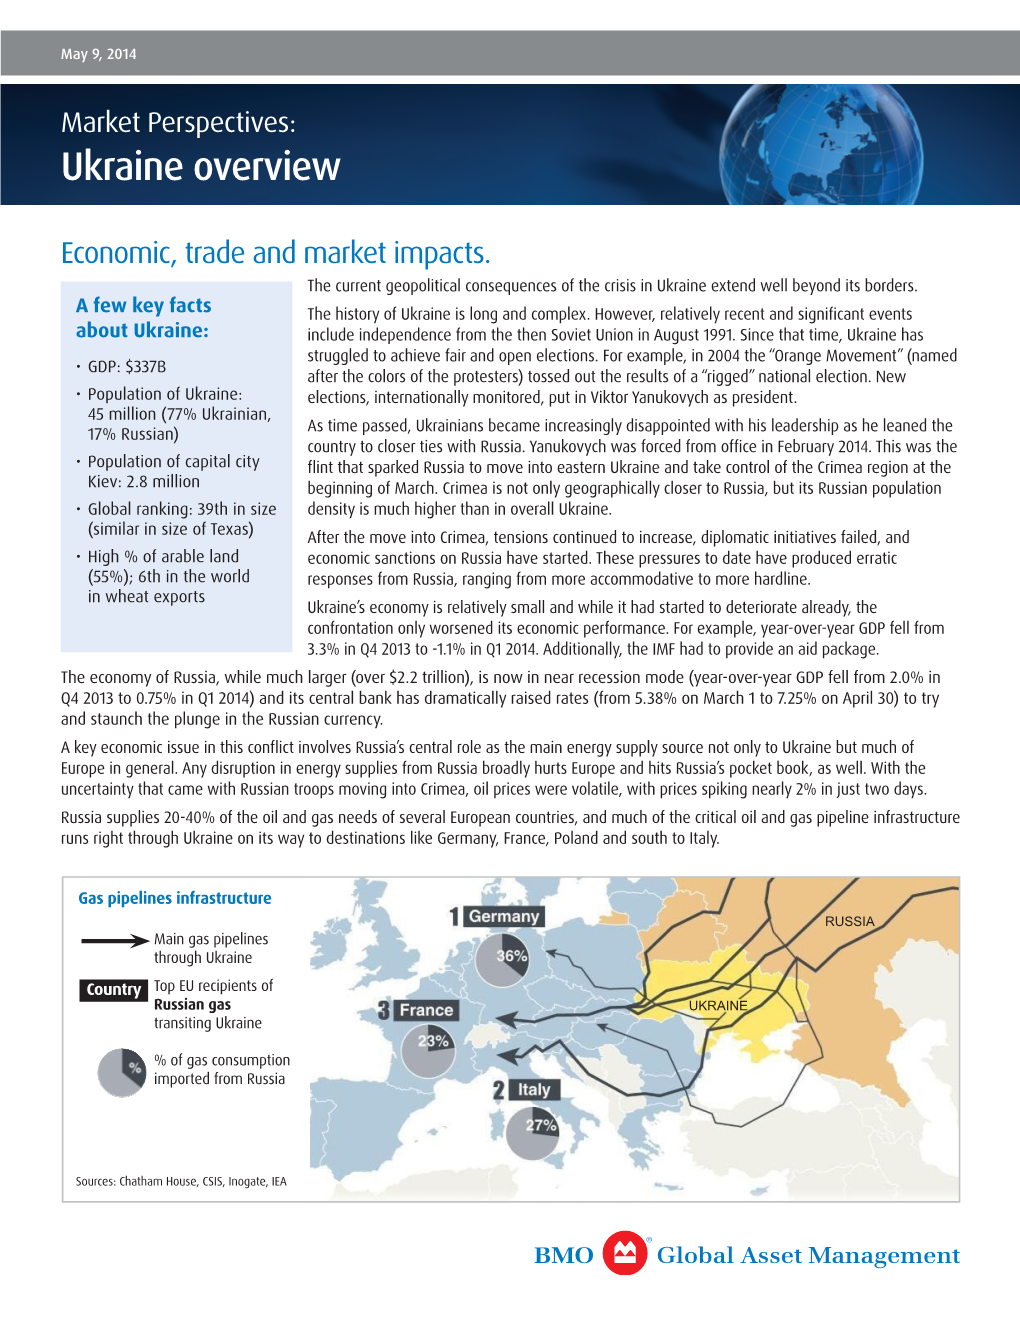 Ukraine Overview